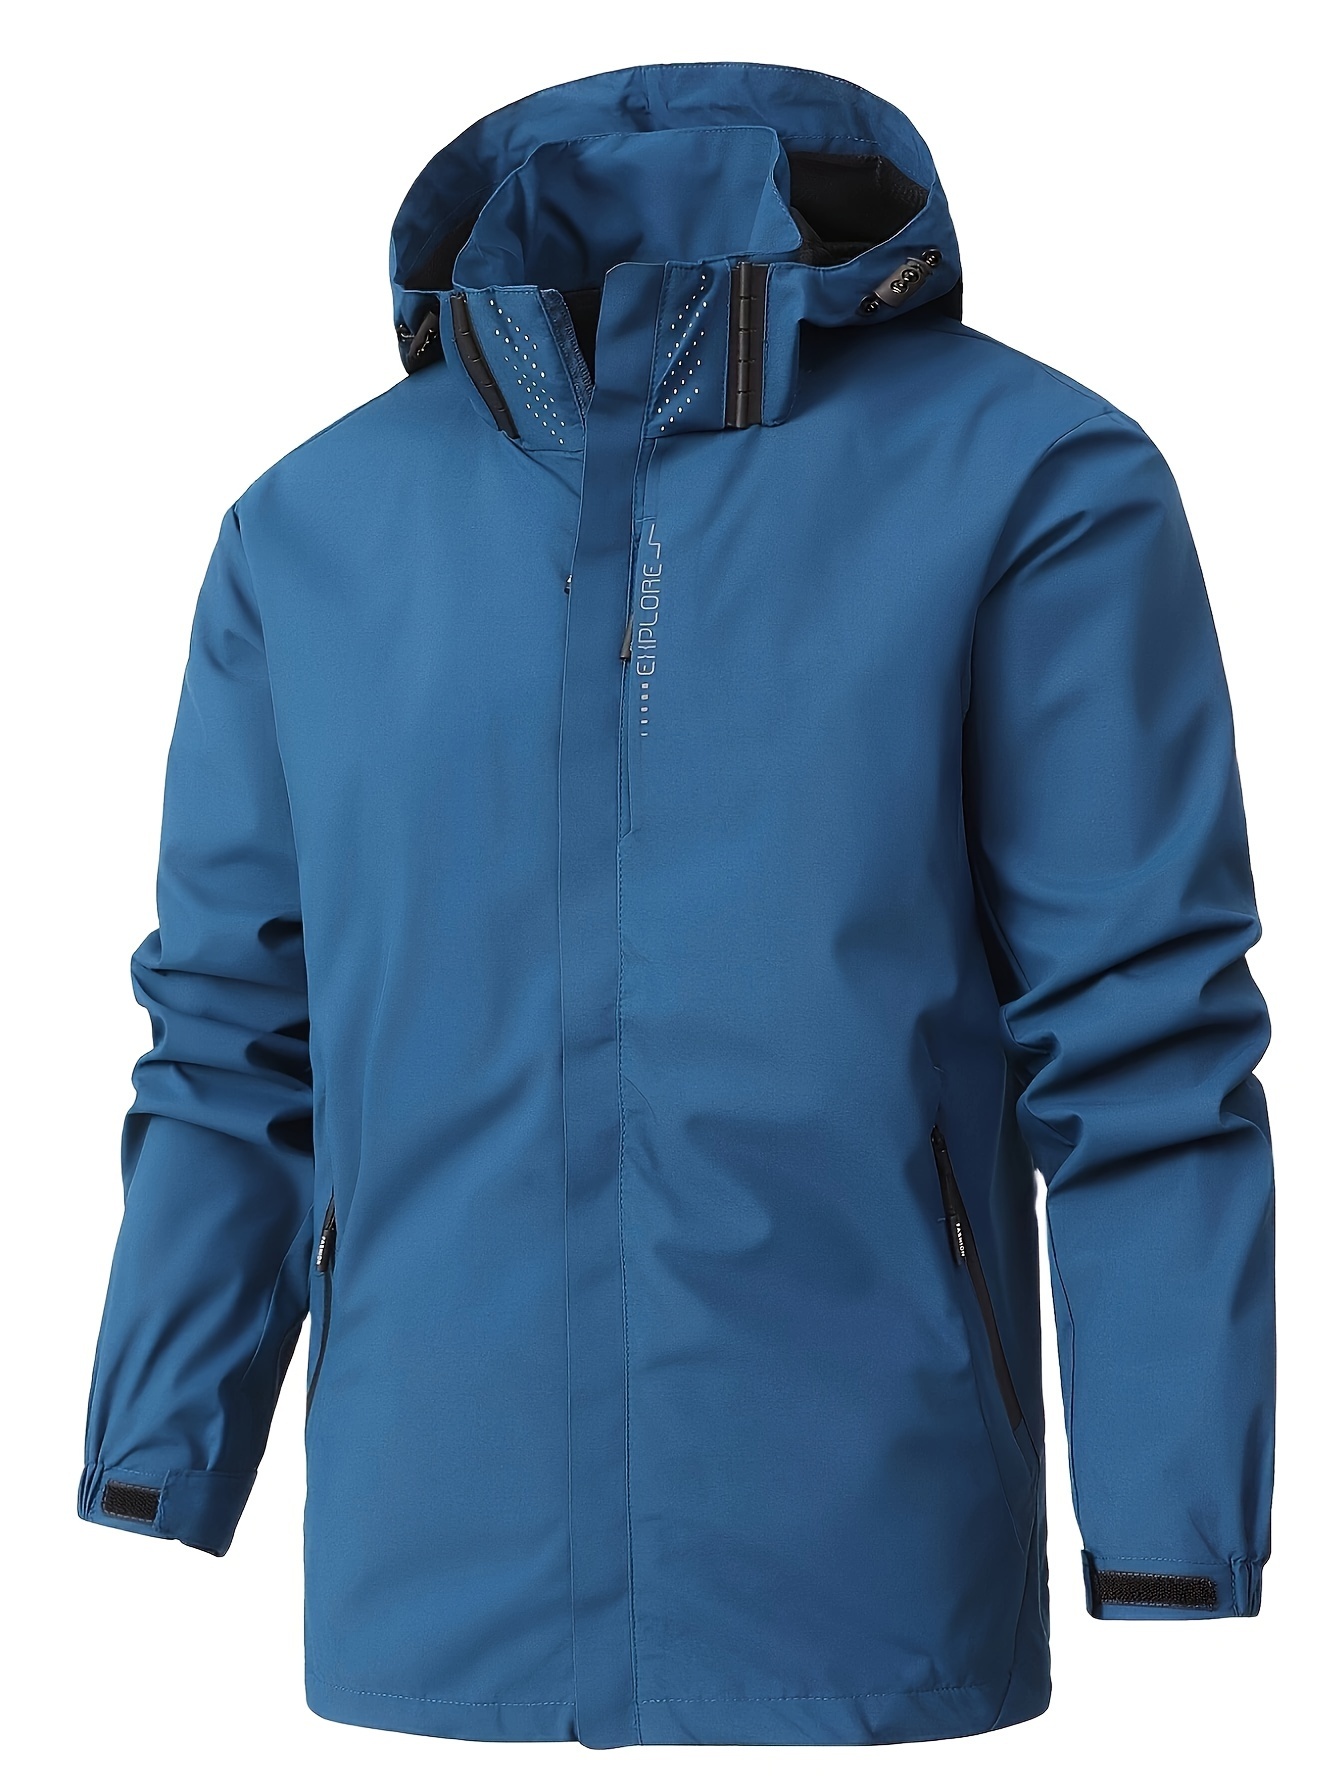 Men's Lightweight Waterproof Rain Jacket, Hooded Shell Outdoor Raincoat  Hiking Windbreaker Jacket Coat